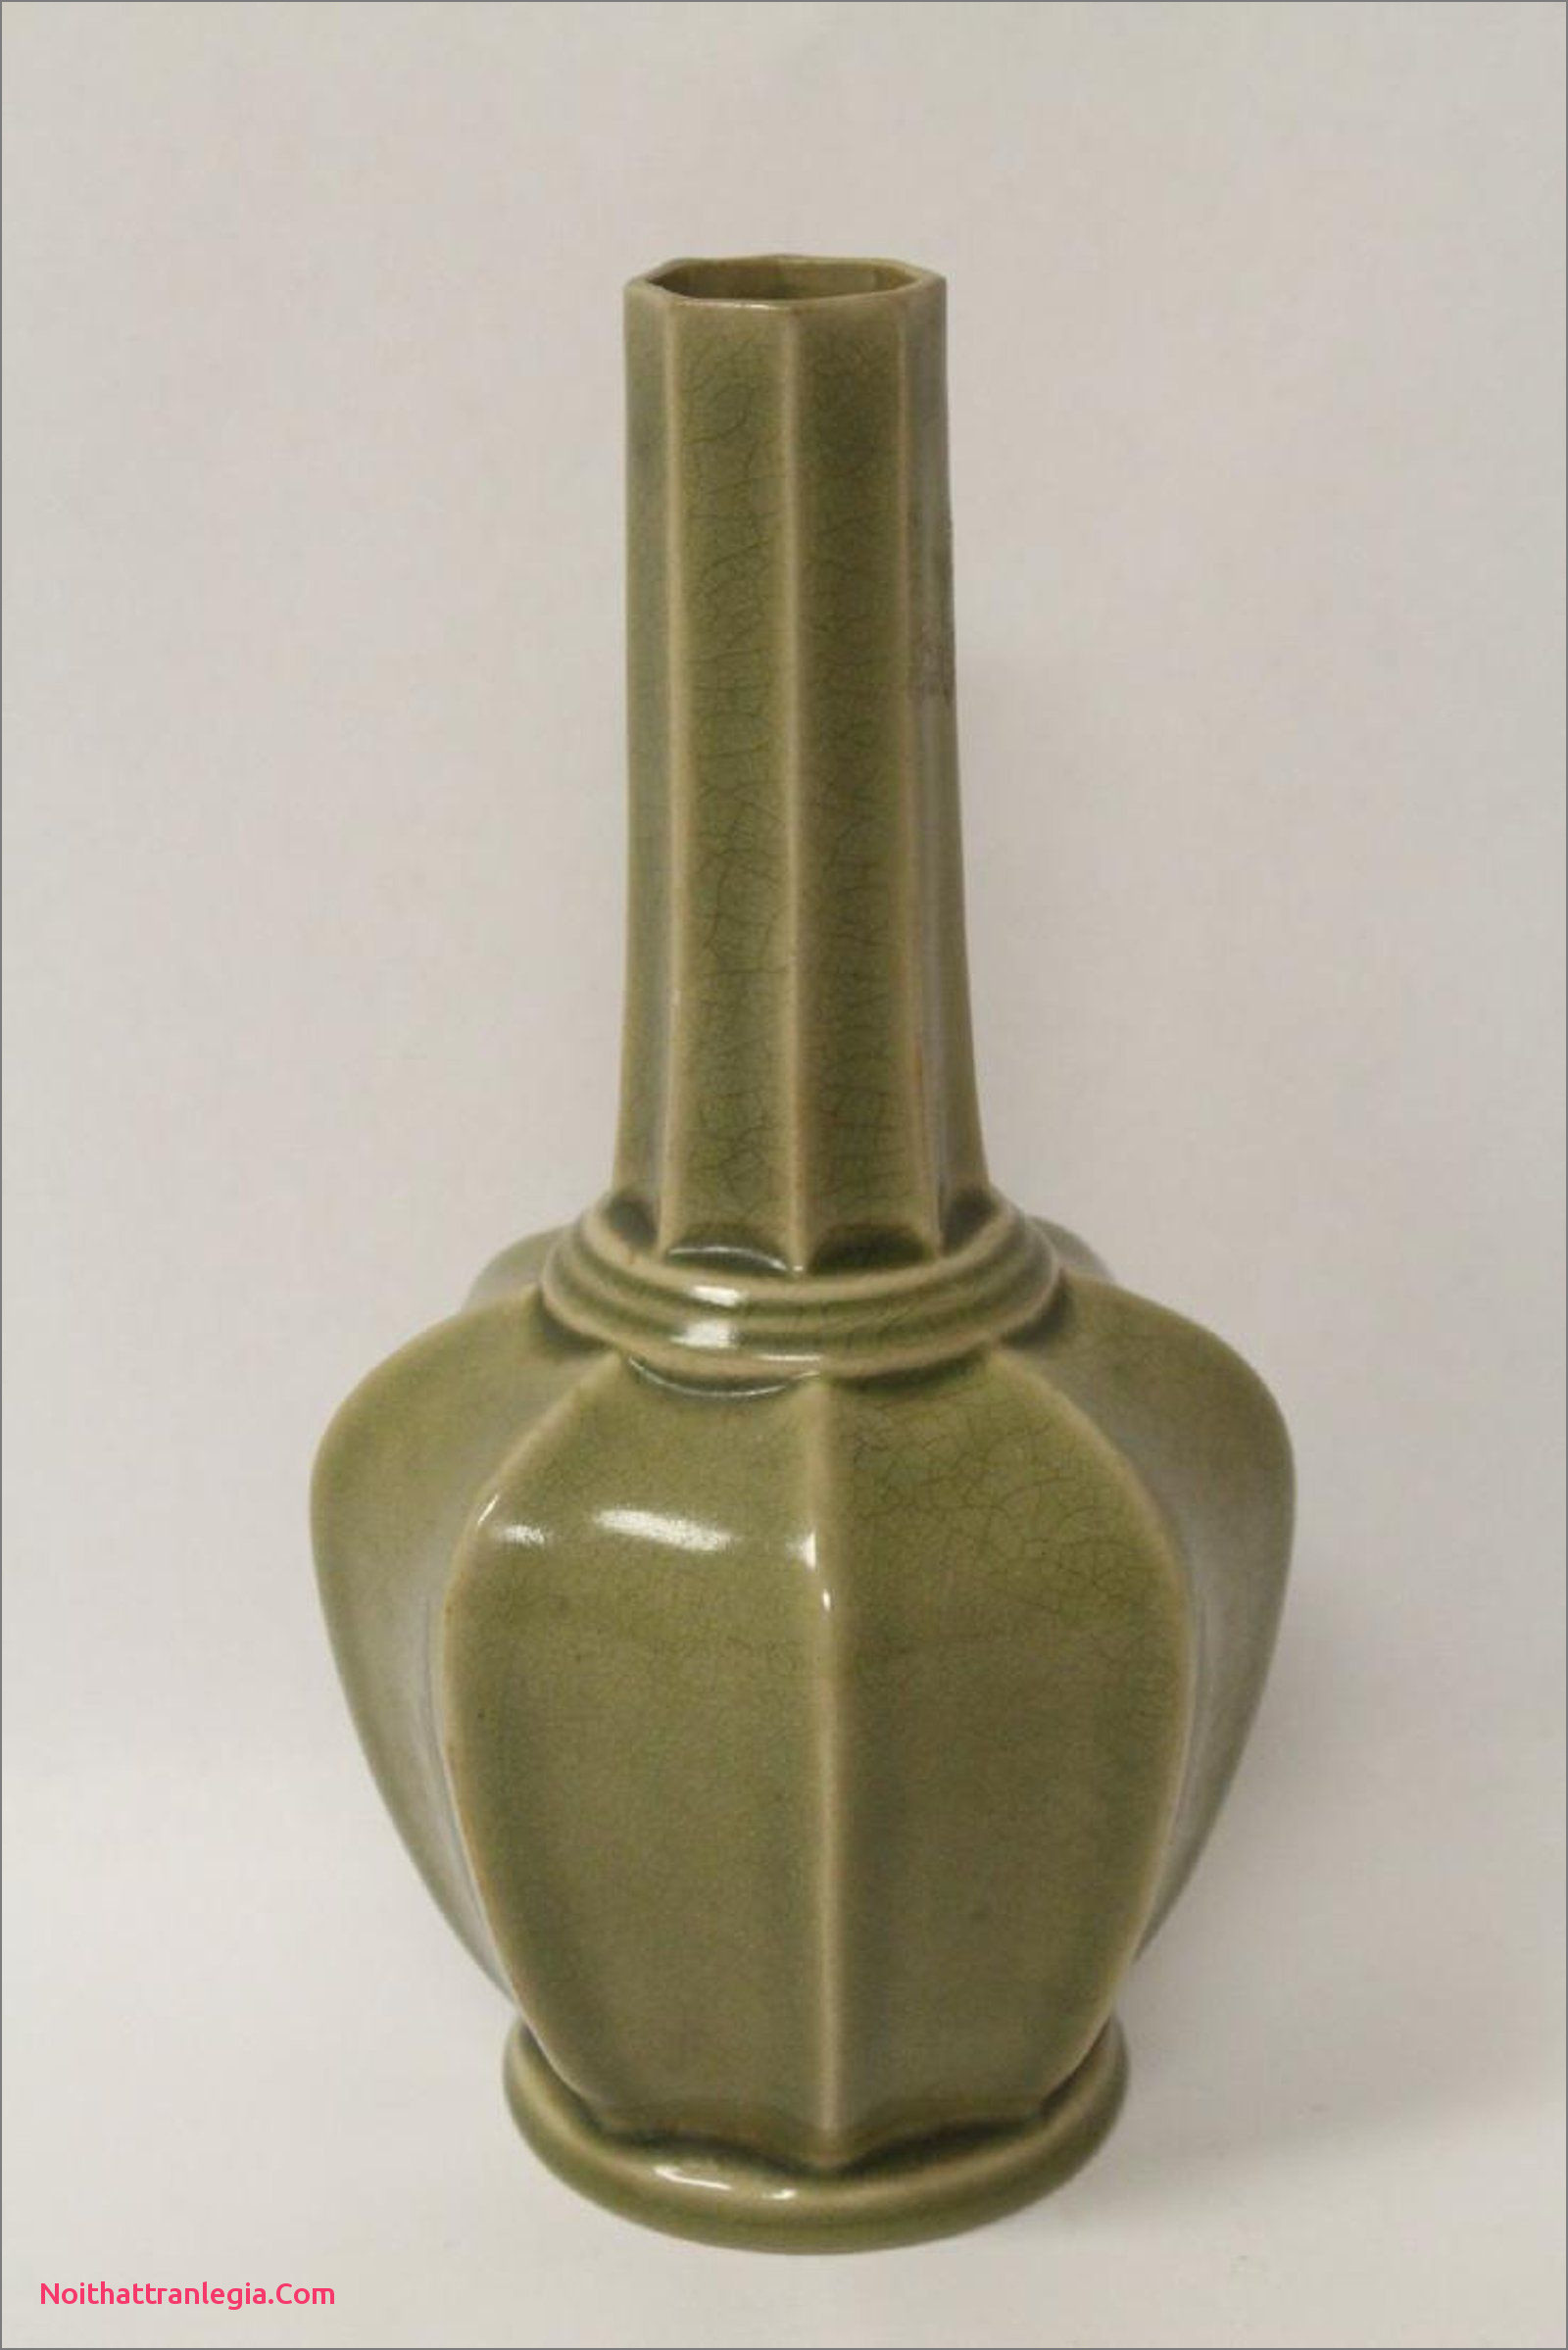 japanese glass vase of 20 chinese antique vase noithattranlegia vases design pertaining to chinese song style celadon porcelain vase